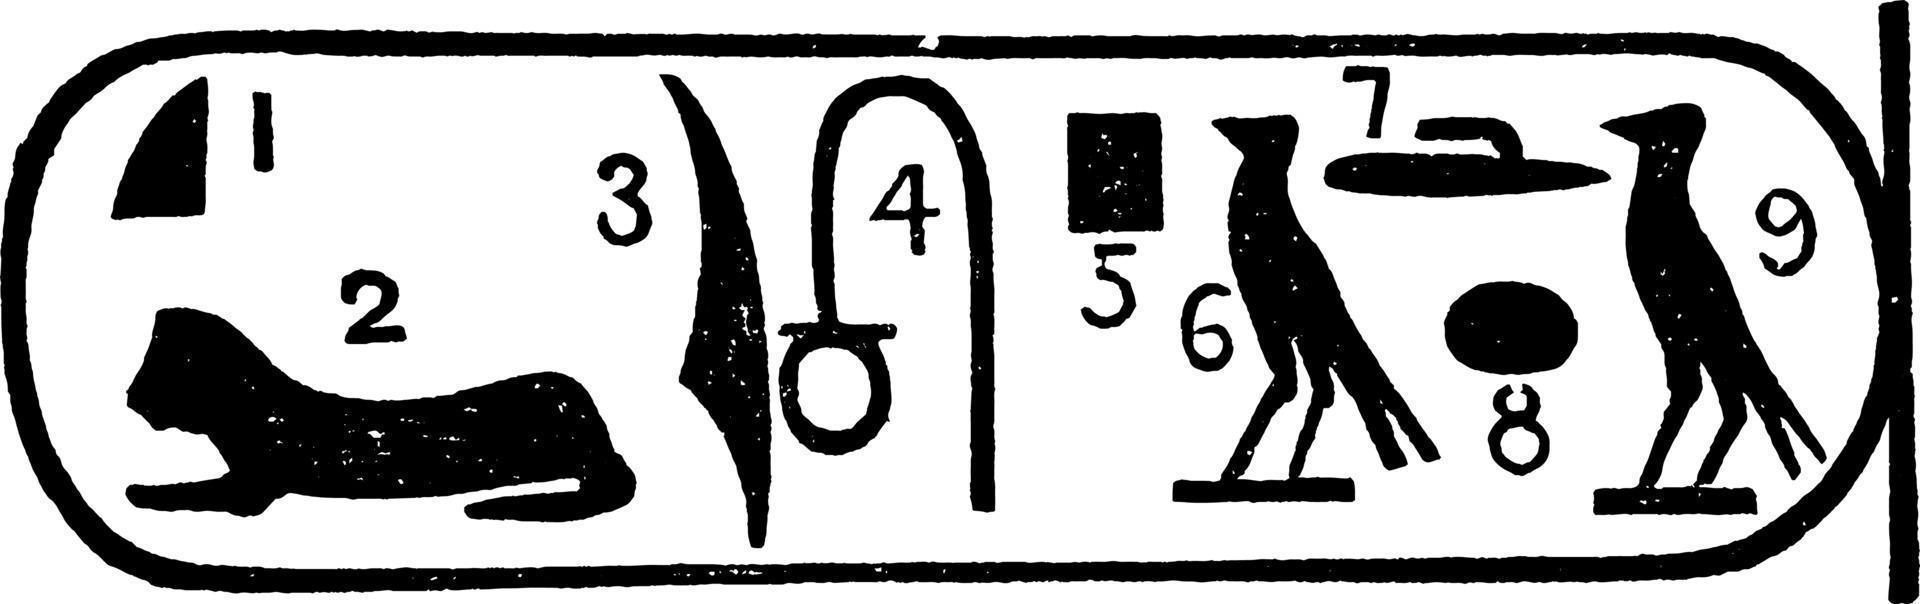 Rosetta Stone or reading hieroglyphics, vintage engraving vector